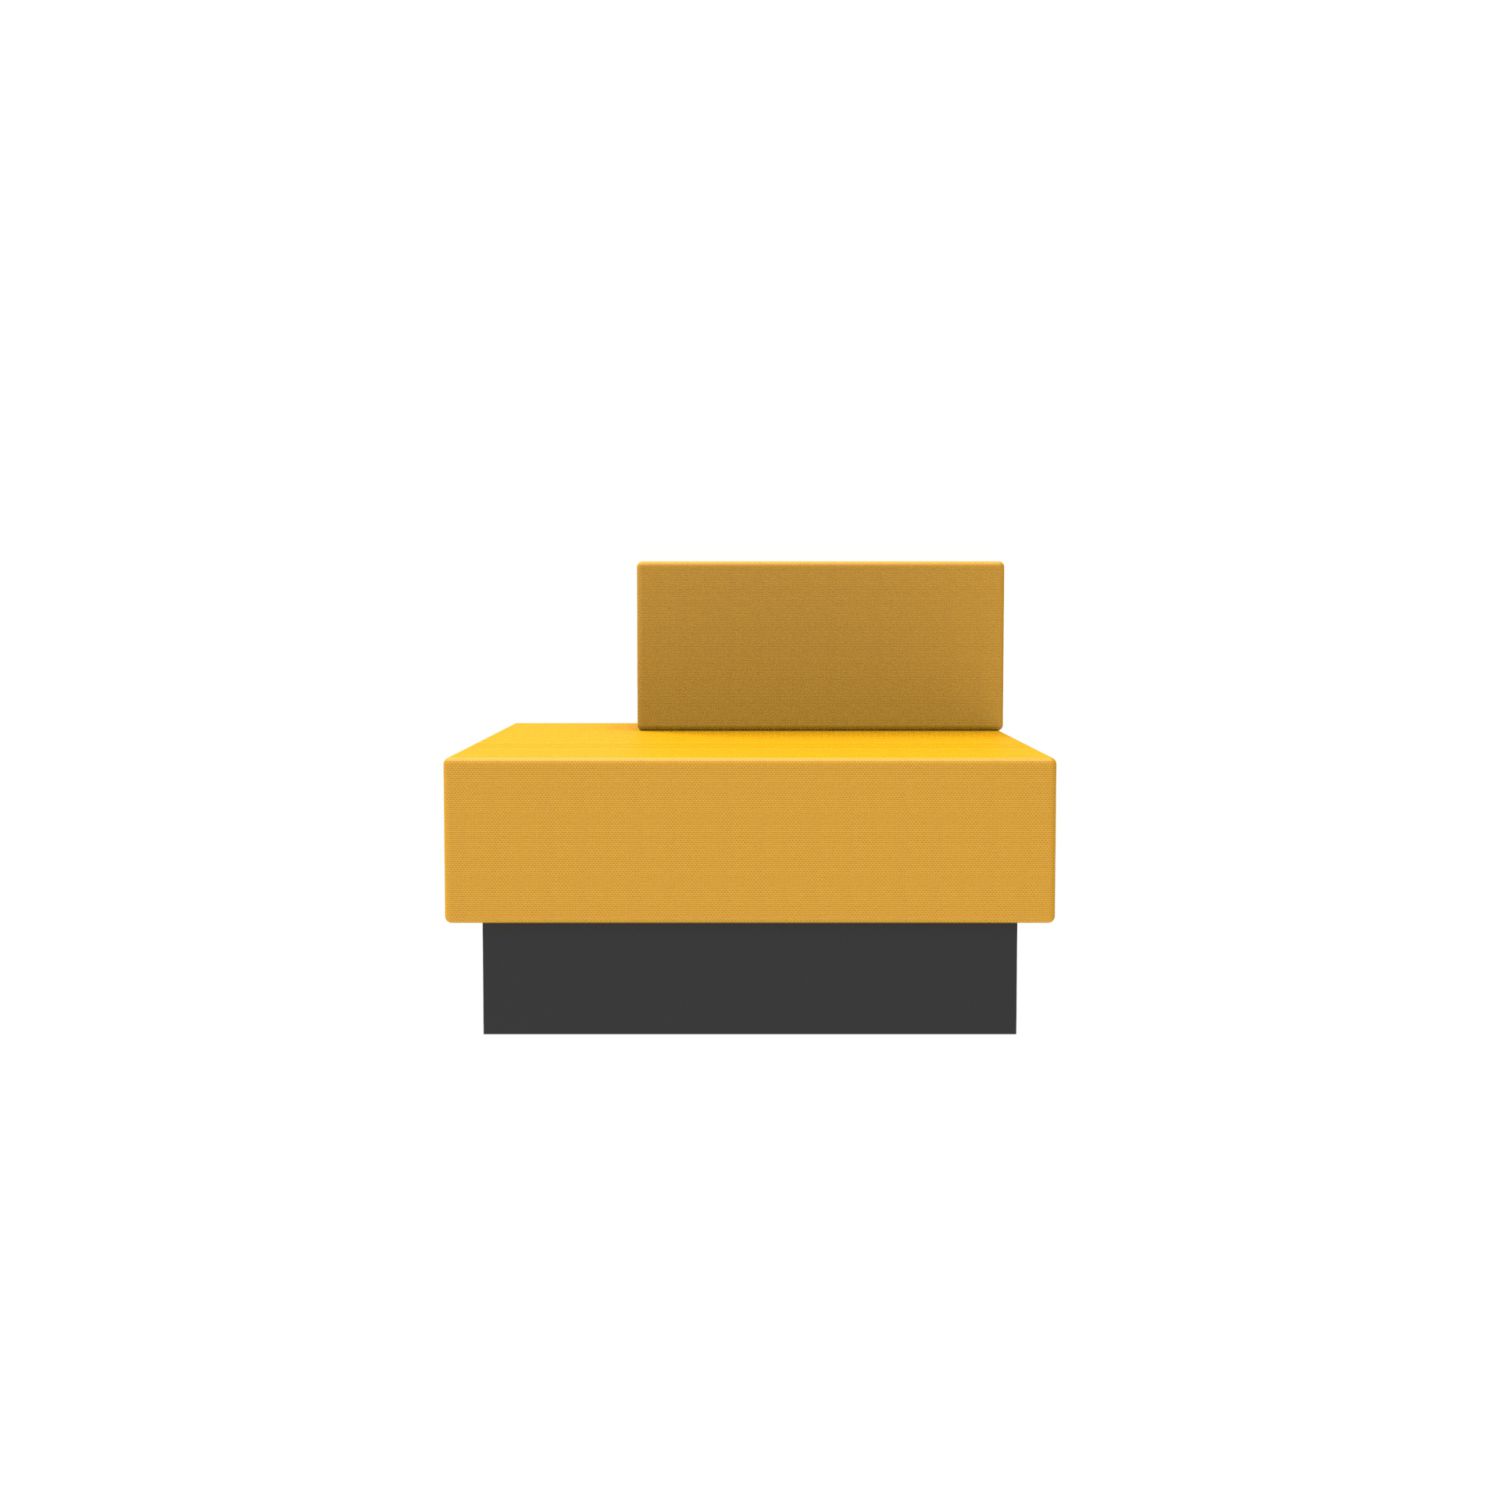 lensvelt oma blocks lounging edition closed base with backrest left 90 cm width lemon yellow 051 black ral9005 hard leg ends